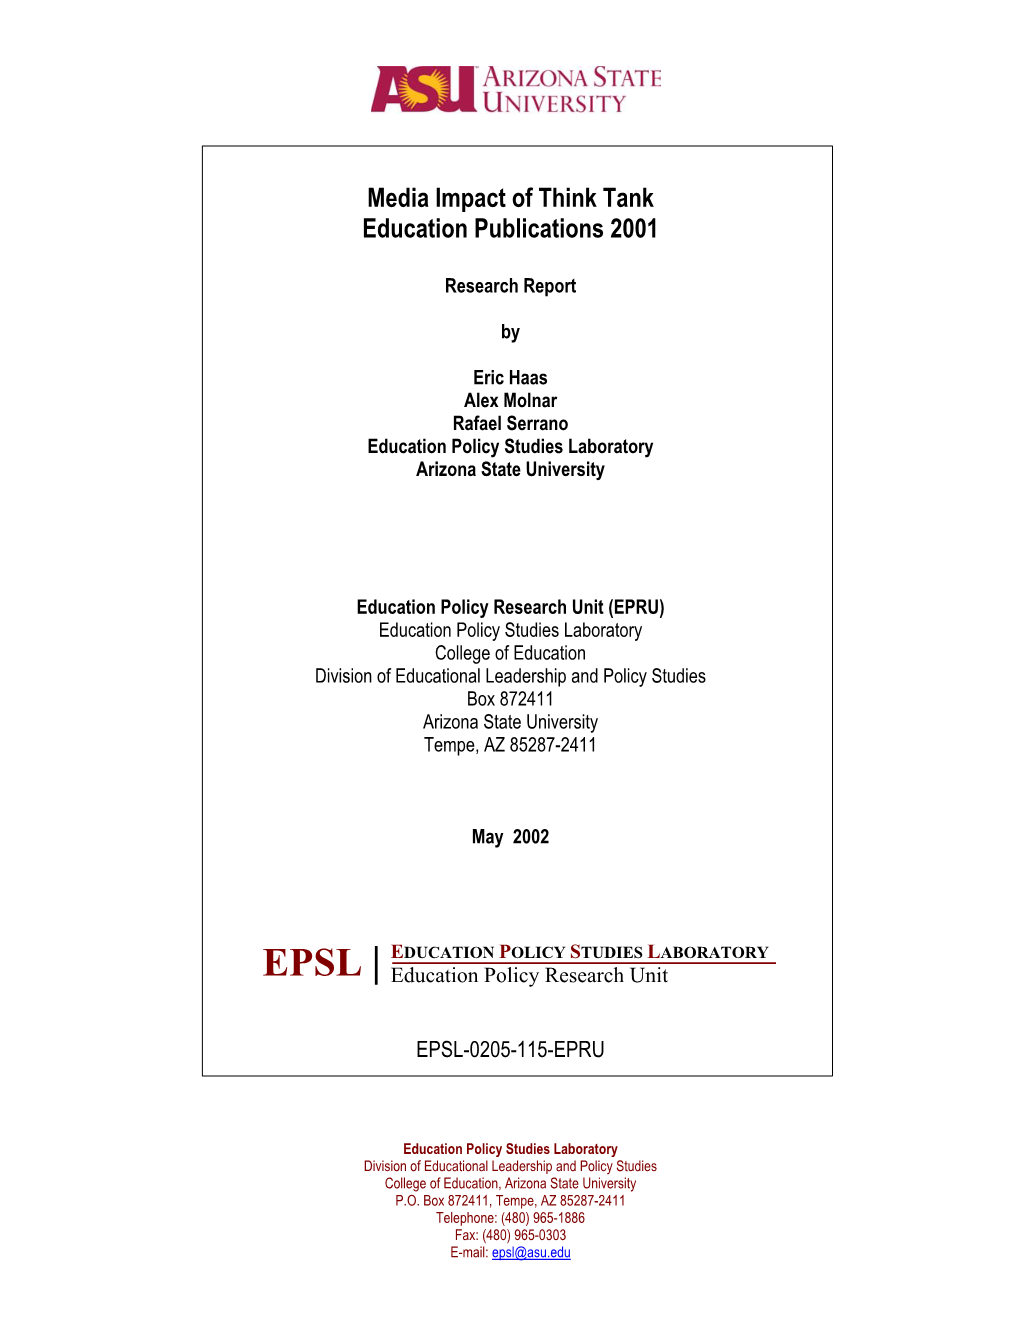 Media Impact of Think Tank Education Publications 2001